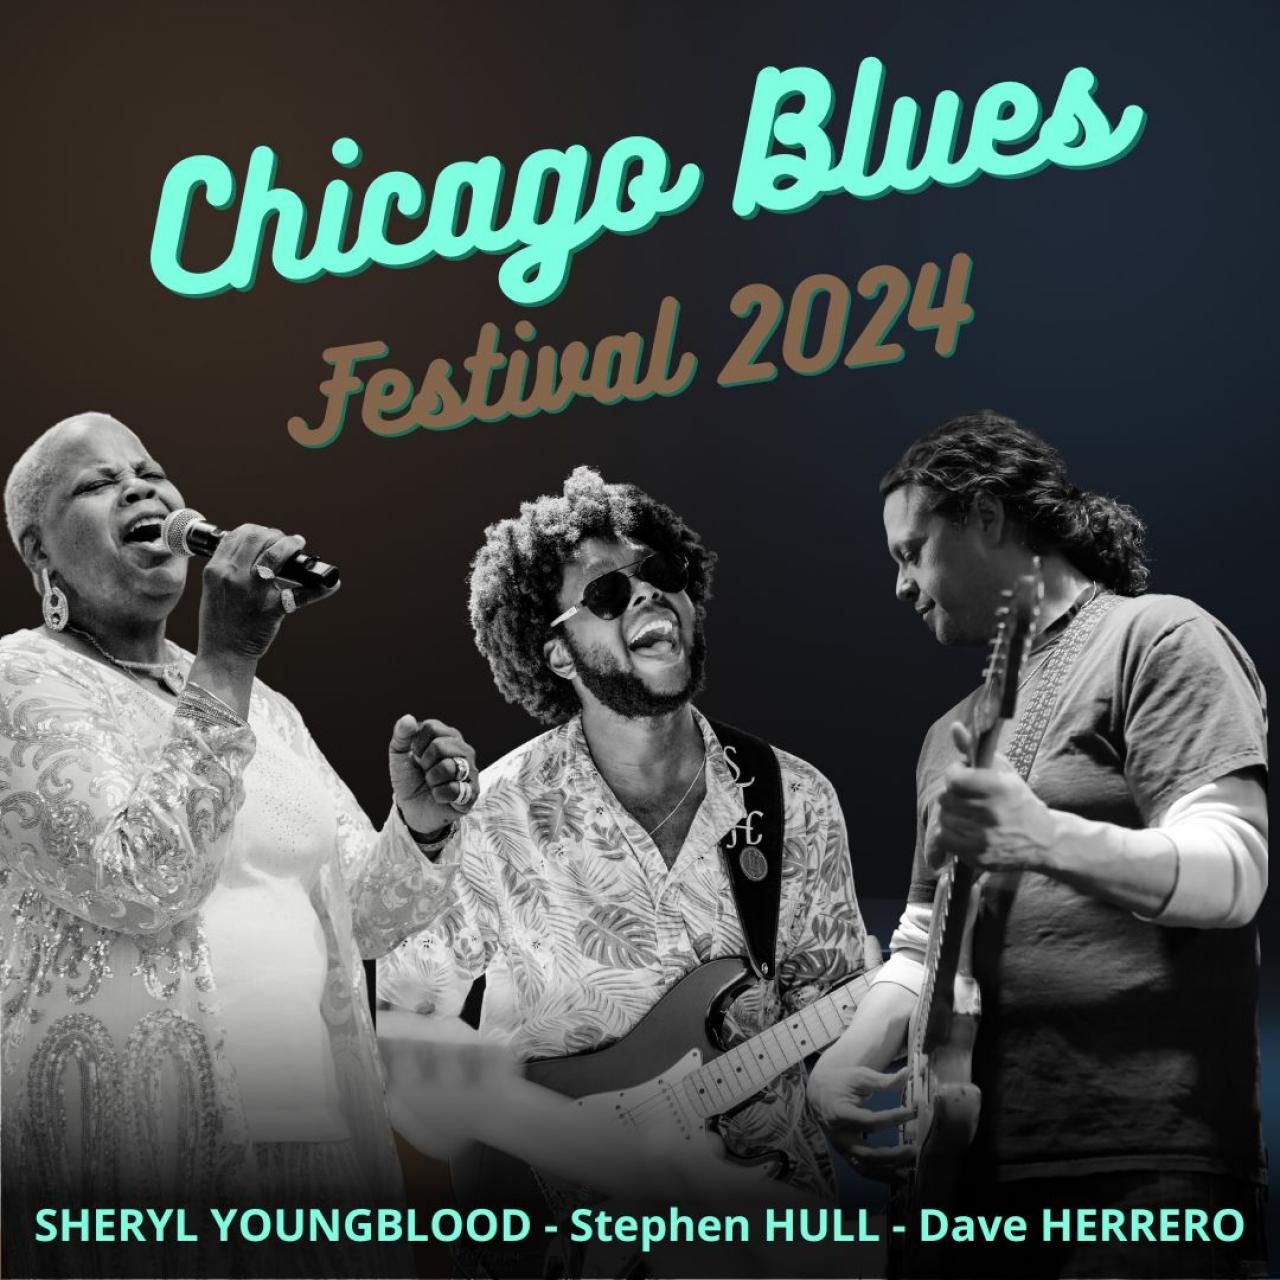 Chicago Blues Festival 2024